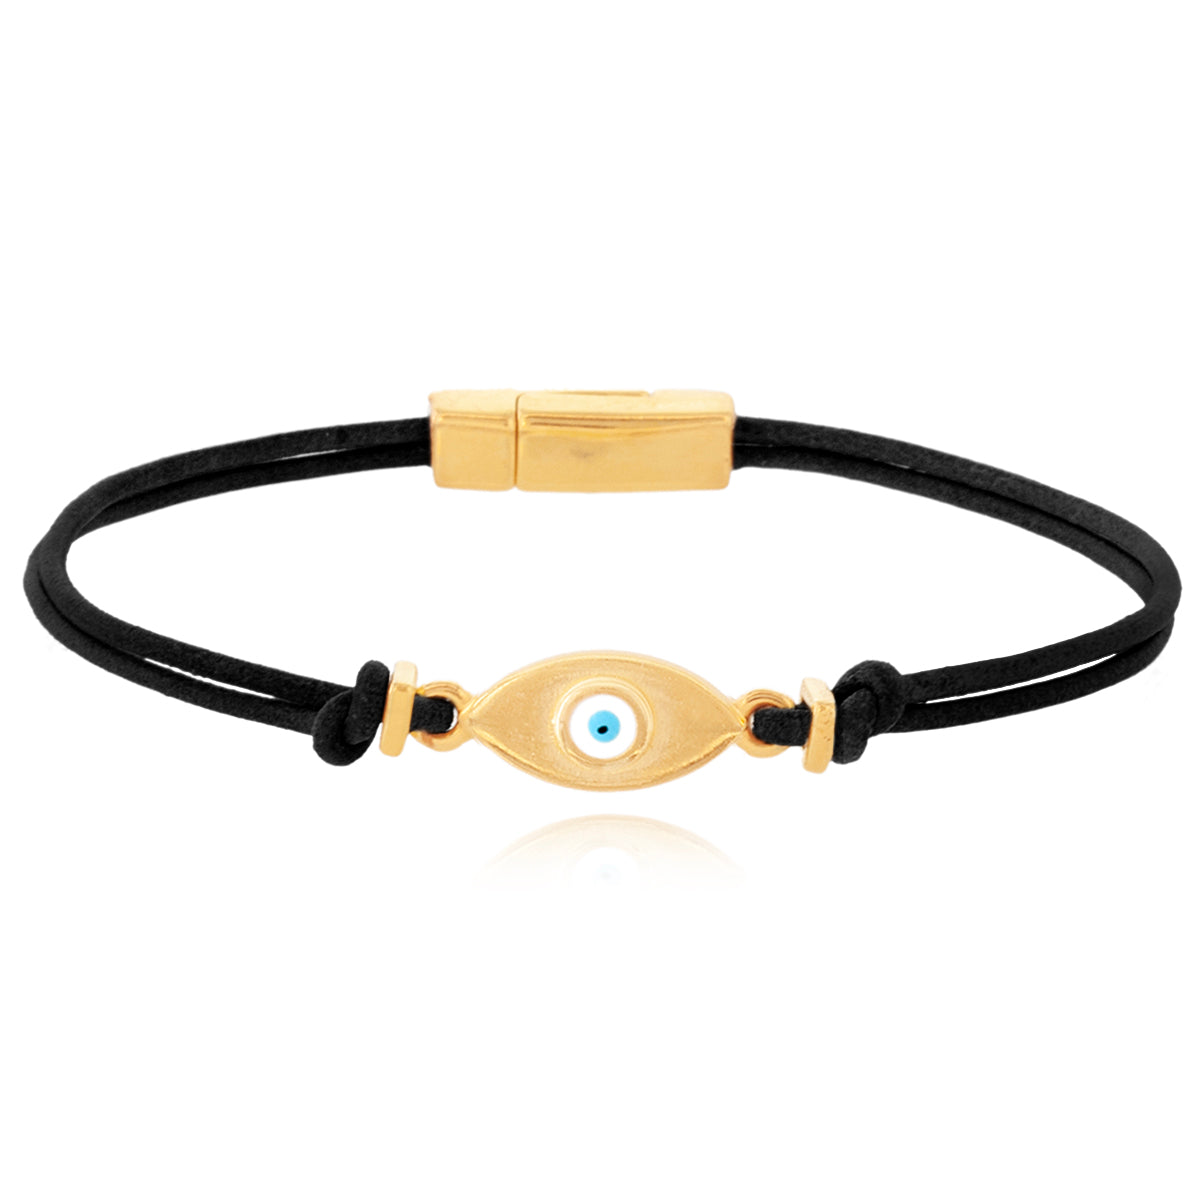 Double-Row Leather Bracelet with Eye Center - Black